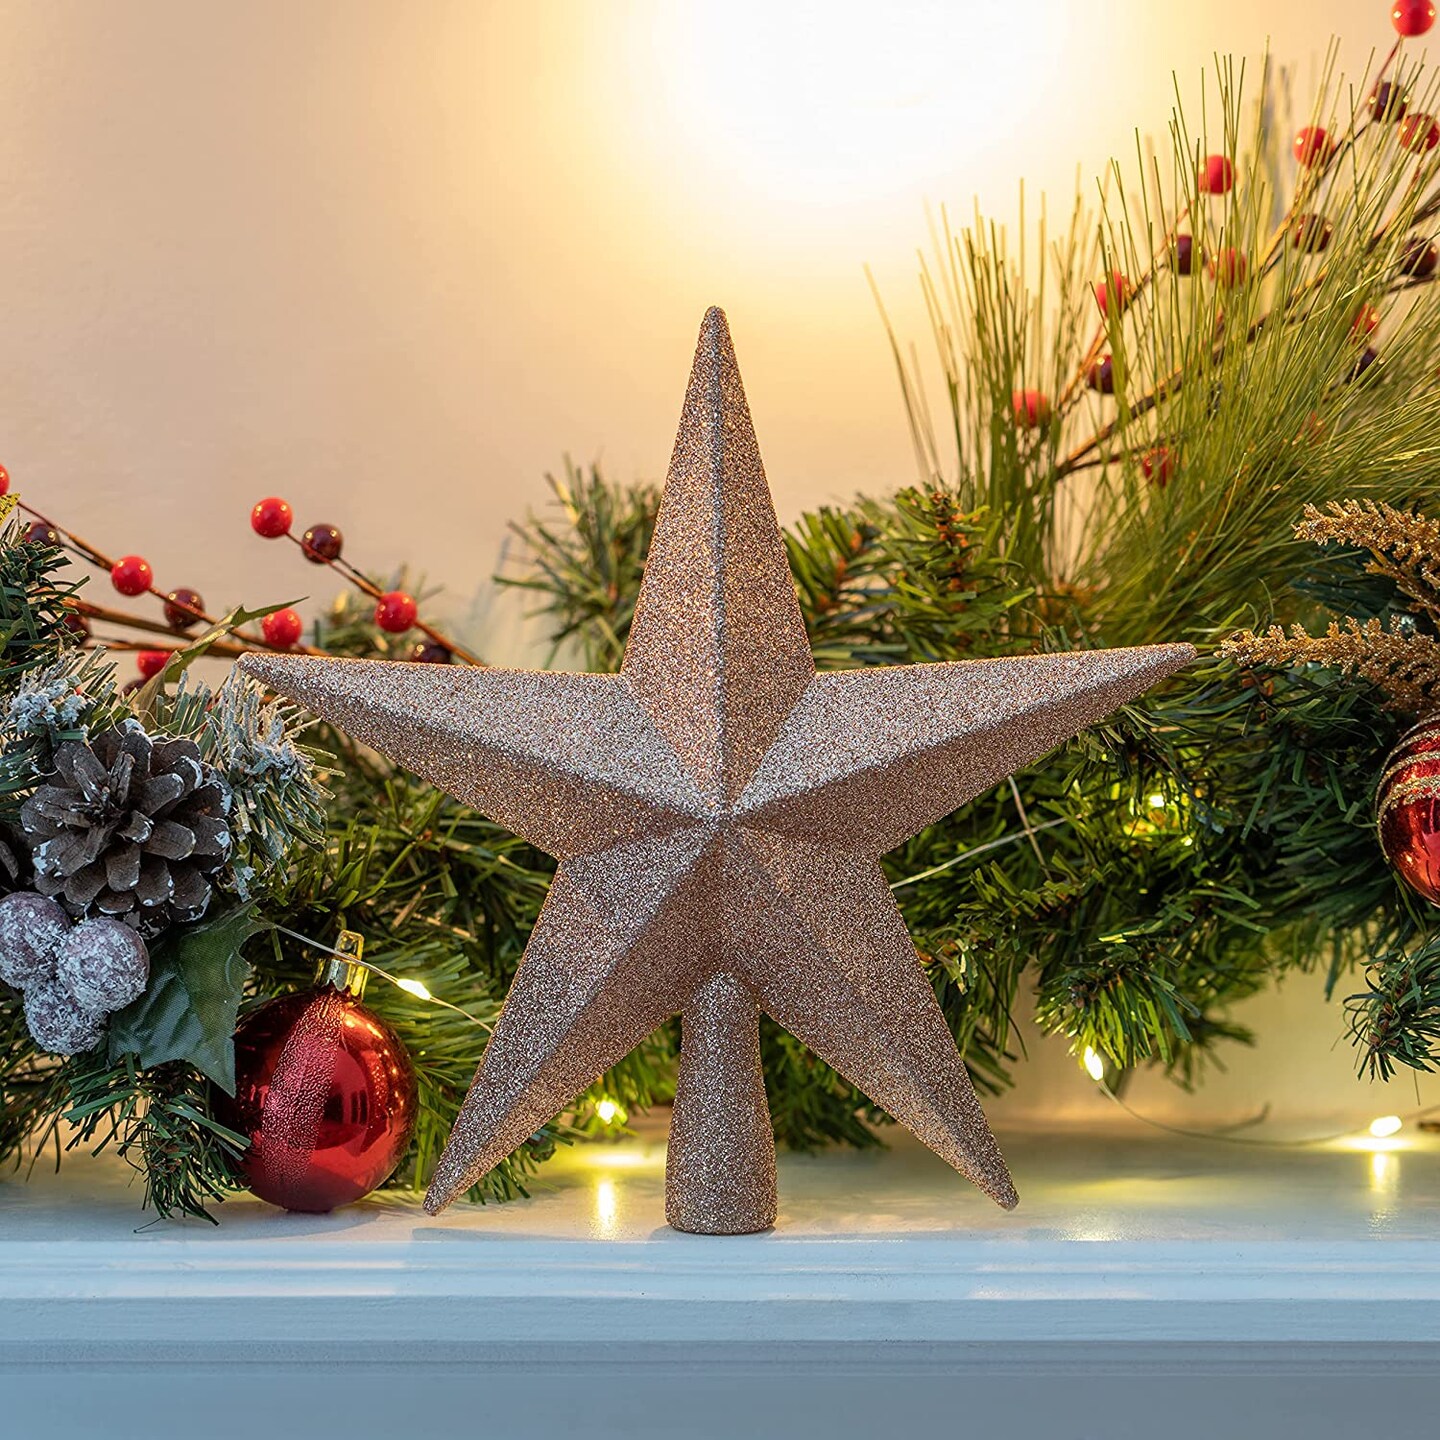 Ornativity Glitter Star Tree Topper - Christmas Champagne Decorative Holiday Bethlehem Star Ornament